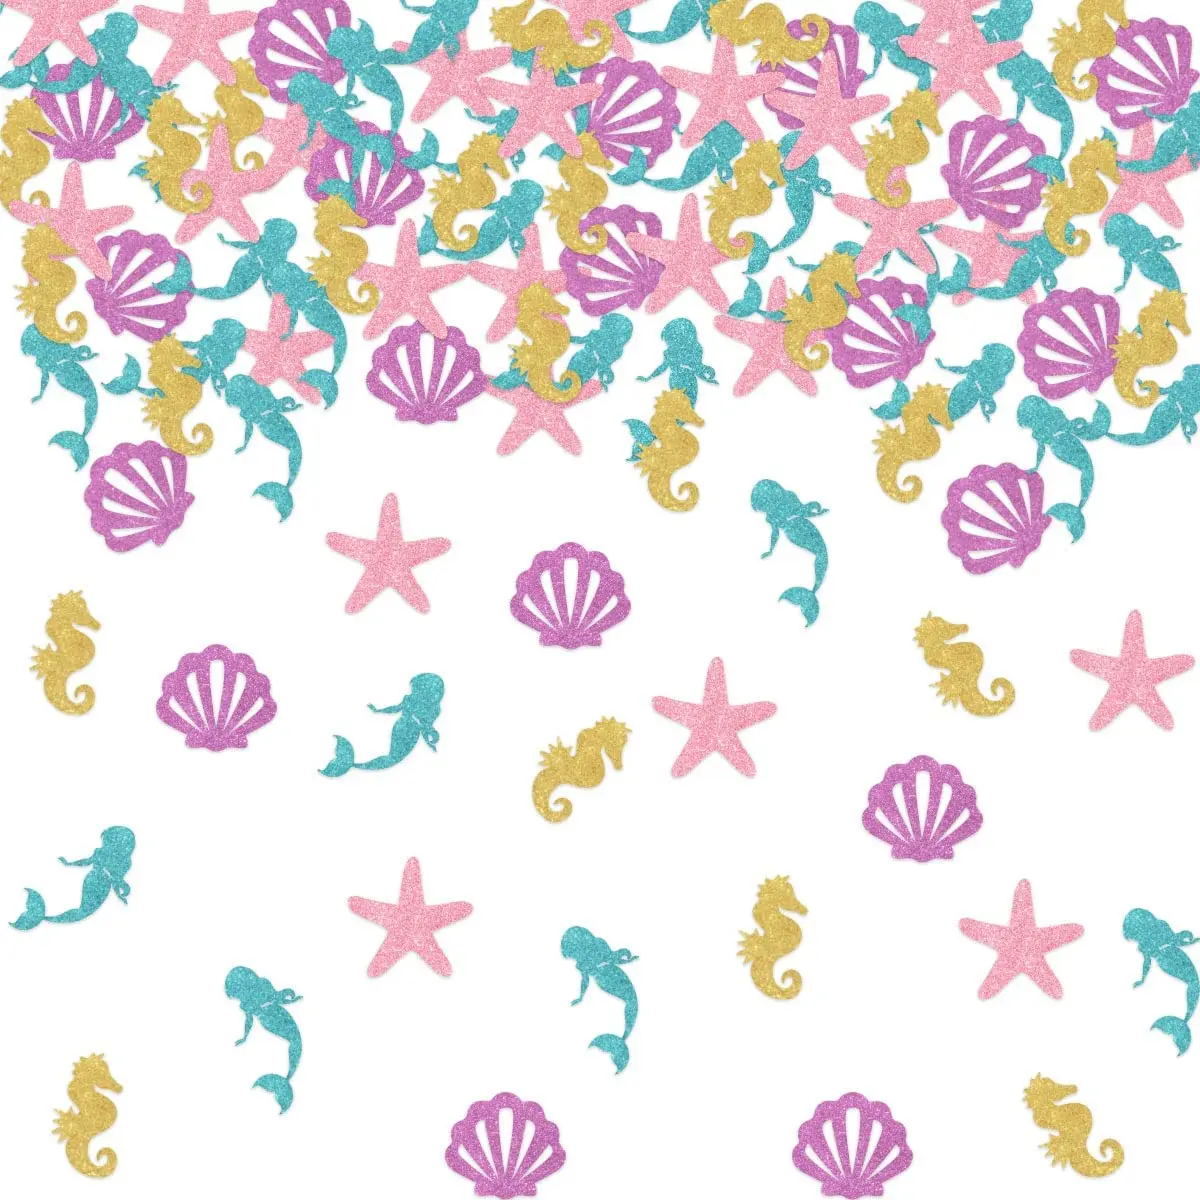 JOYMEMO 200 Pcs Mermaid Confetti Glitter Sea Animal Seashell Confetti Table Decor Girl Birthday Party Baby Shower Decorations